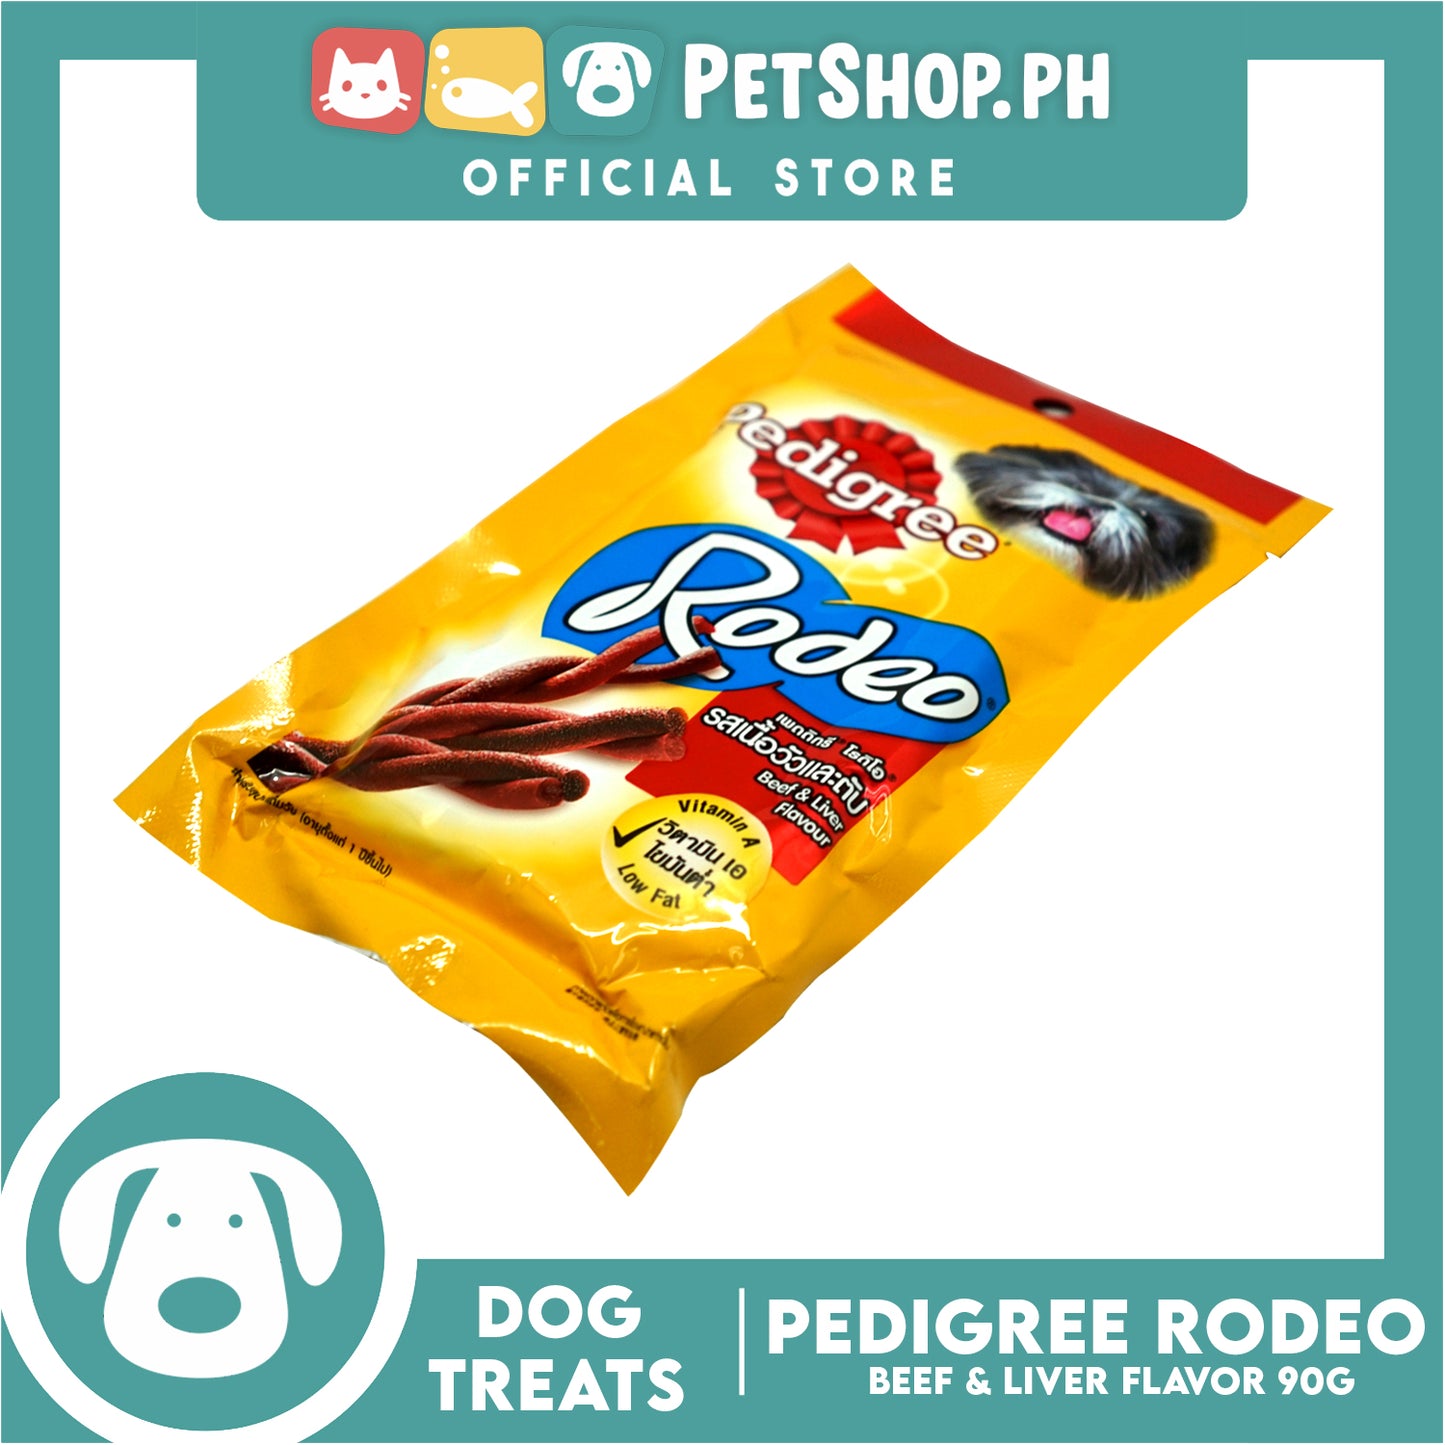 Pedigree Rodeo Beef and Liver Flavor 90g - Dog Treats, Twist Stick